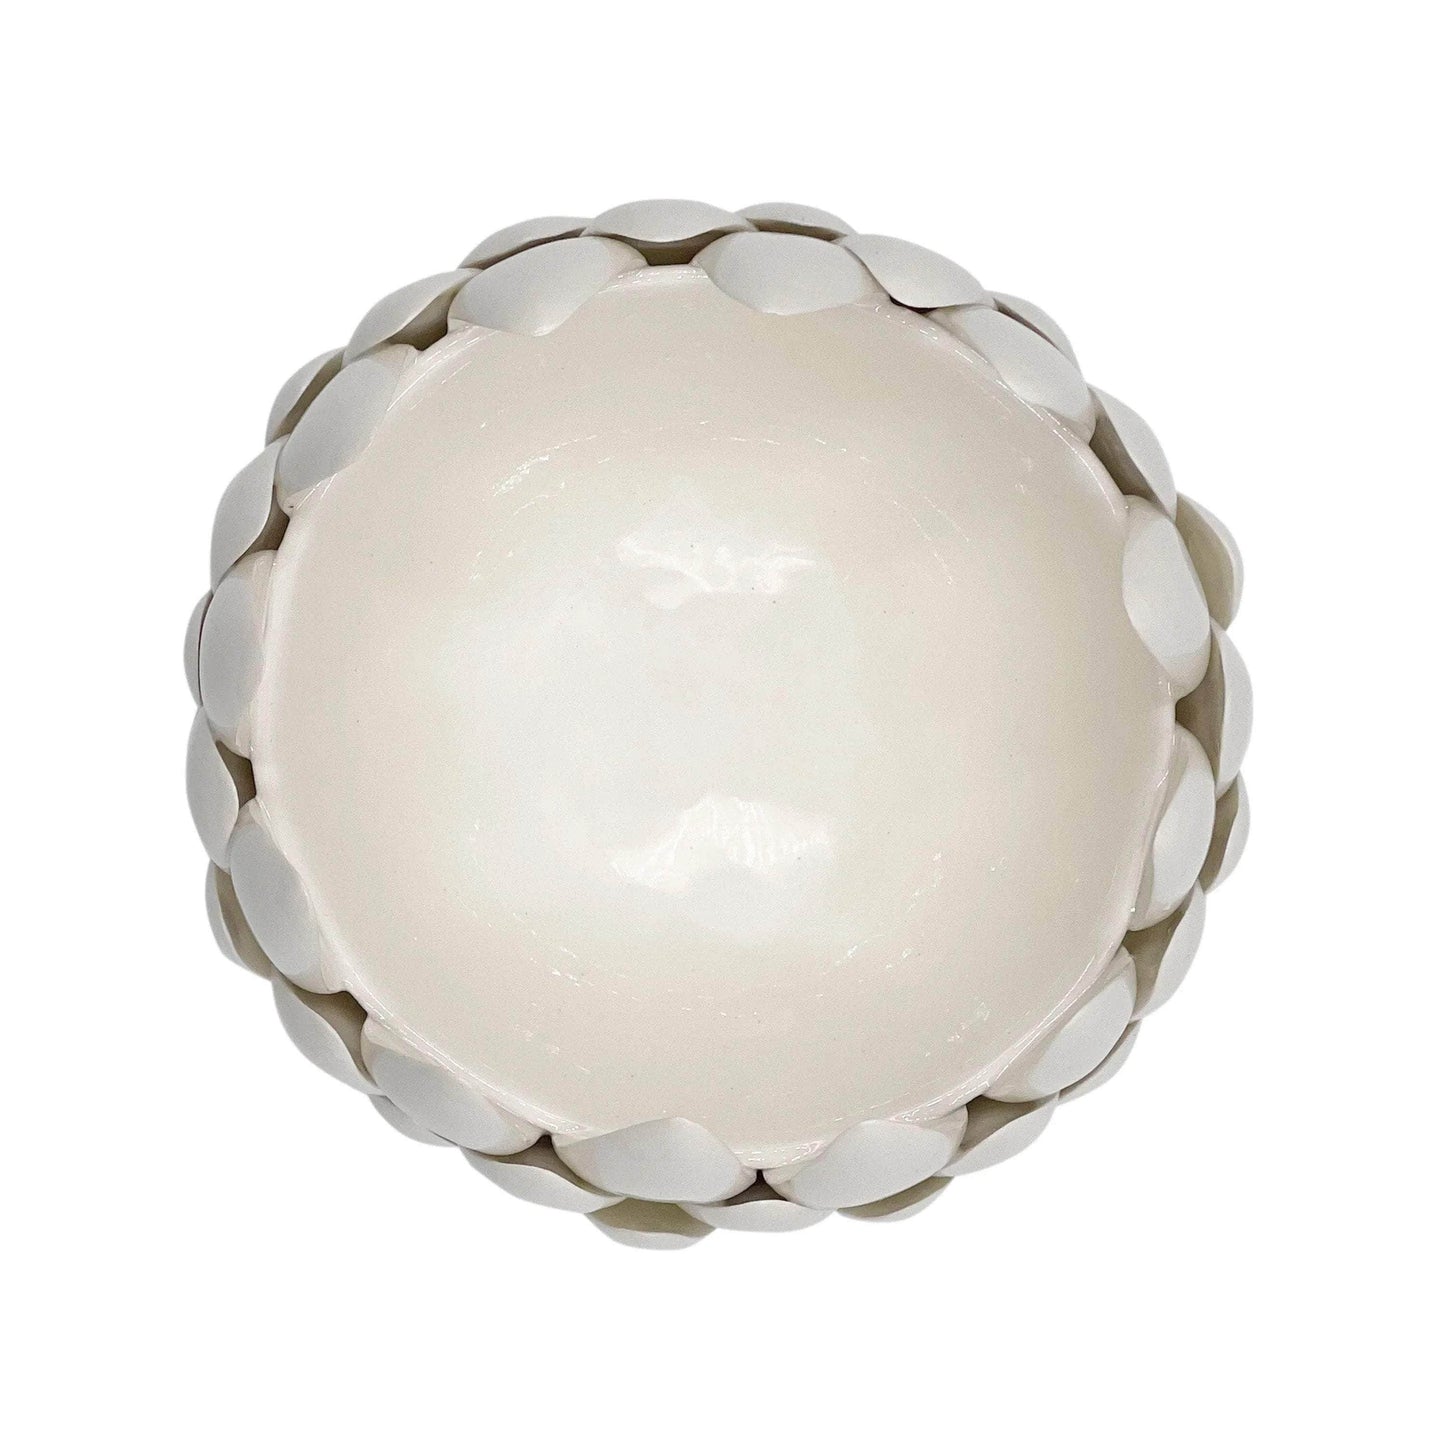 Load image into Gallery viewer, Artichoke Bowl in Cream, Medium
